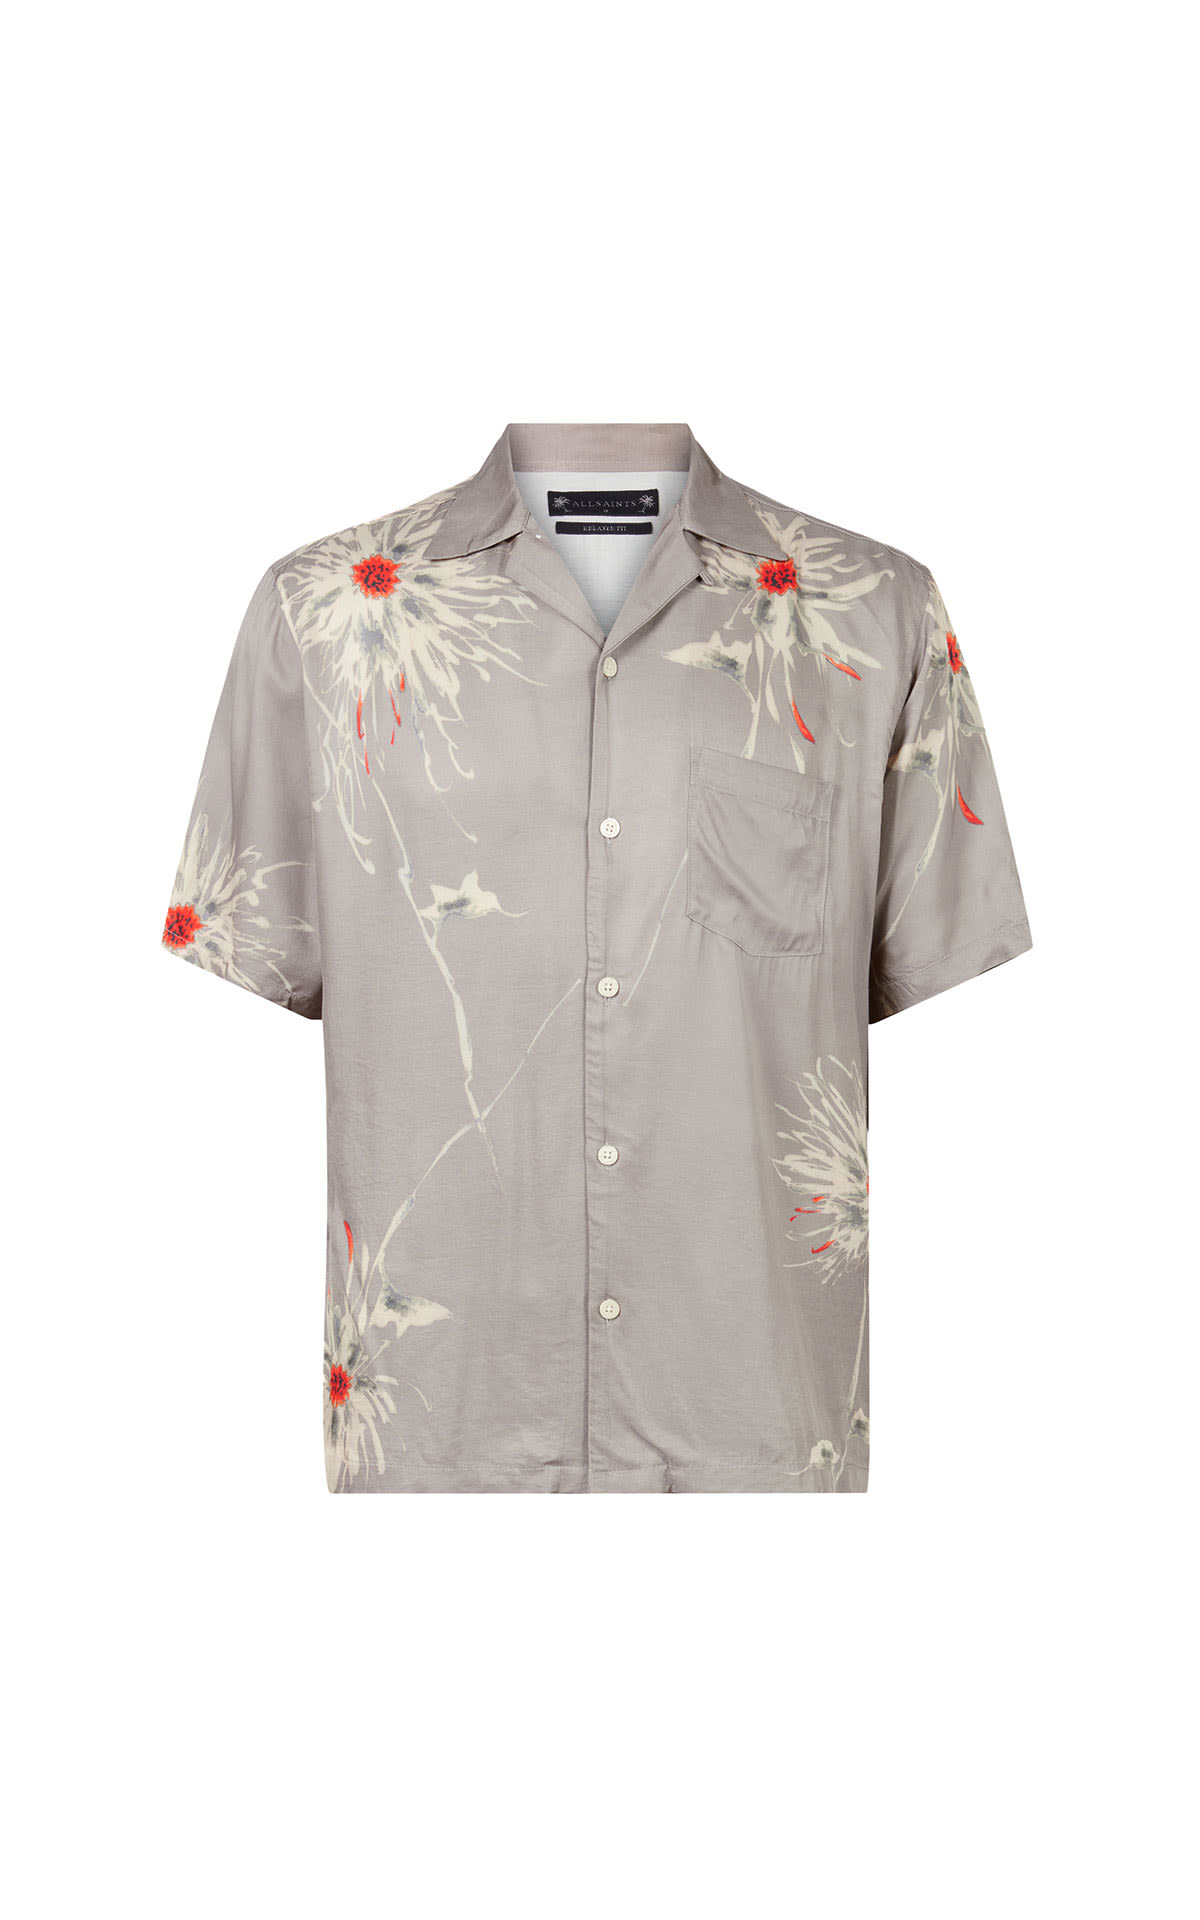 AllSaints Shibu short sleeve shirt from Bicester Village